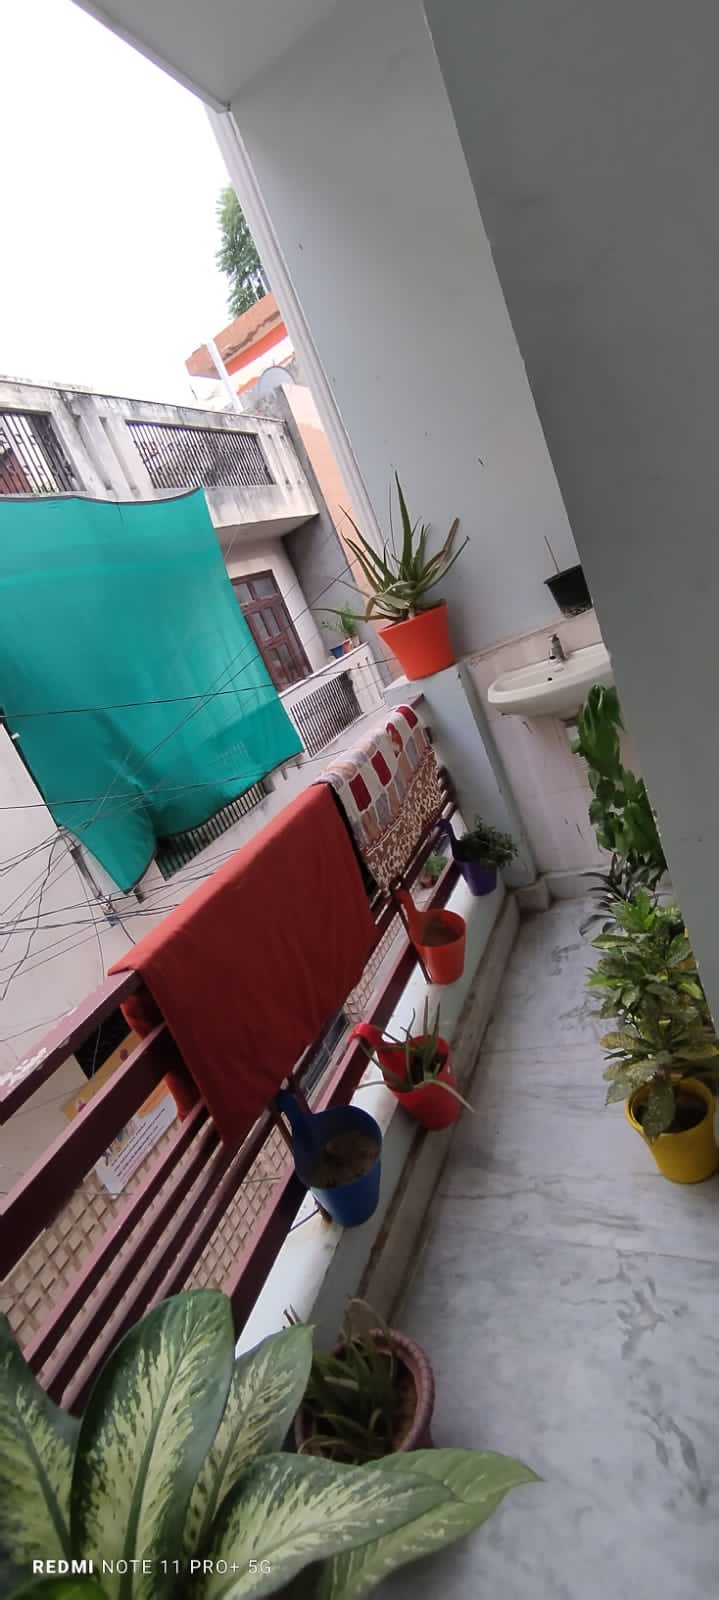 4 Bedroom 50 Sq.Yd. Independent House in Ashok Vihar Phase ii Gurgaon